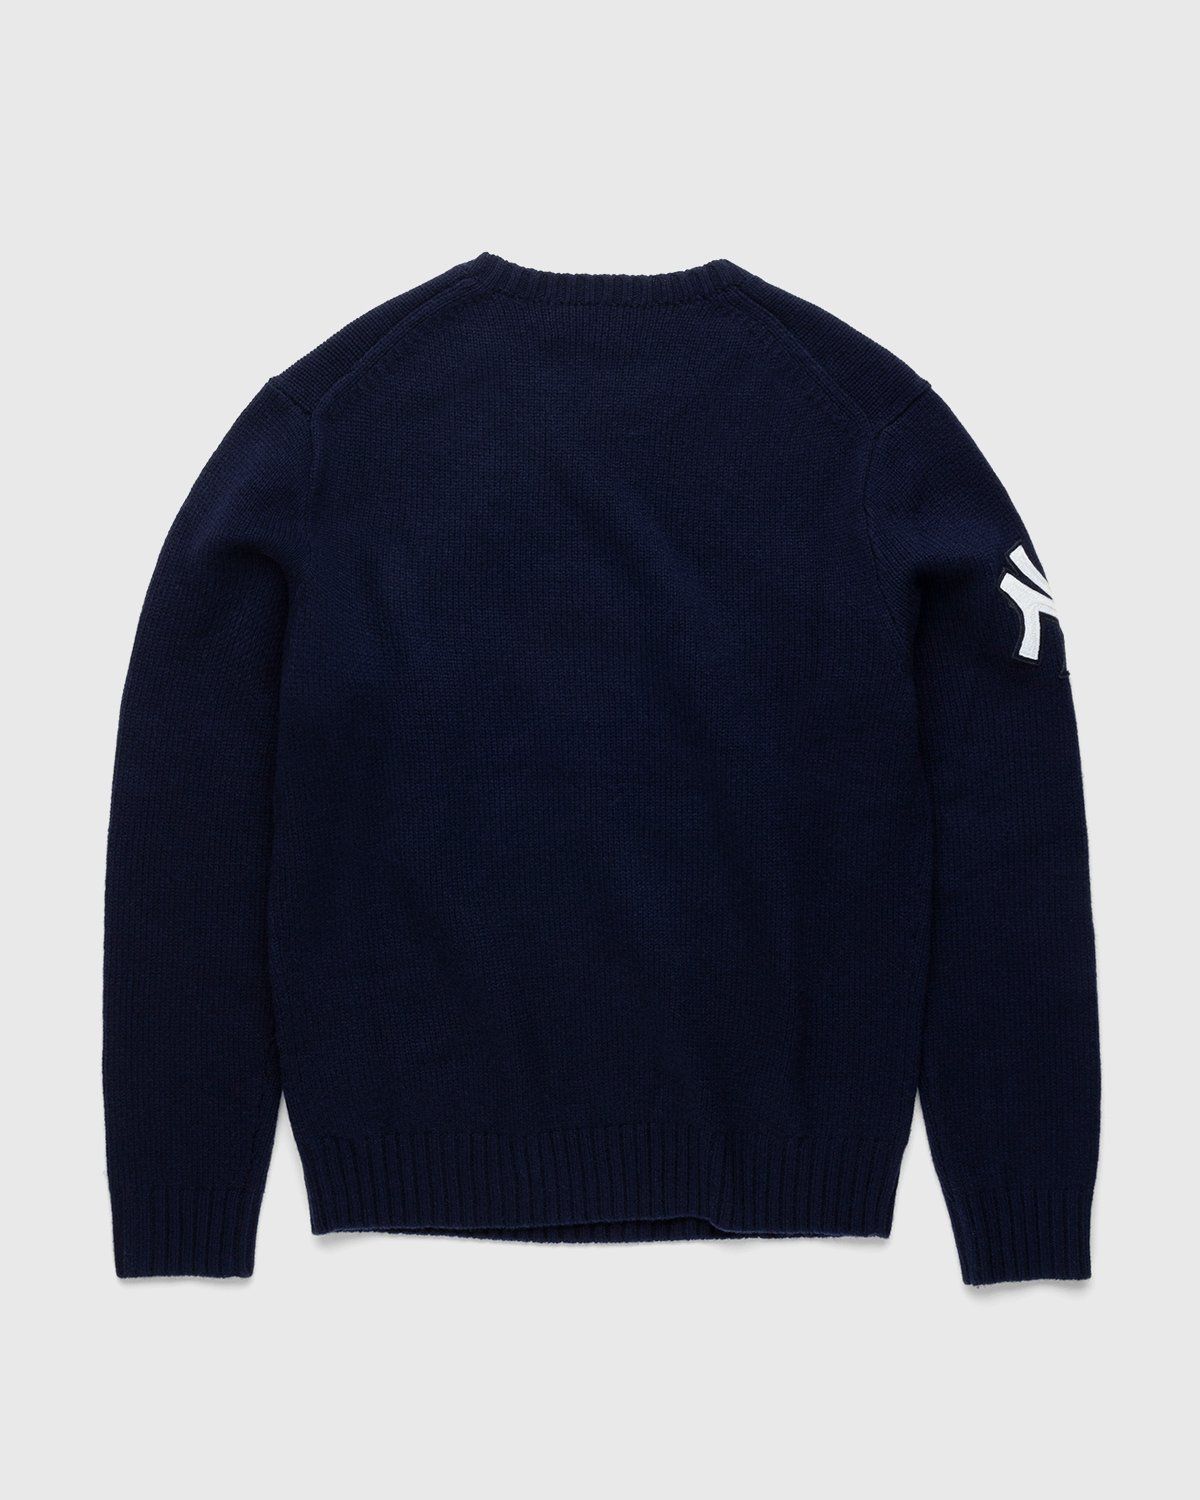 Ralph Lauren – Yankees Bear Sweater Navy - Polos - Blue - Image 2